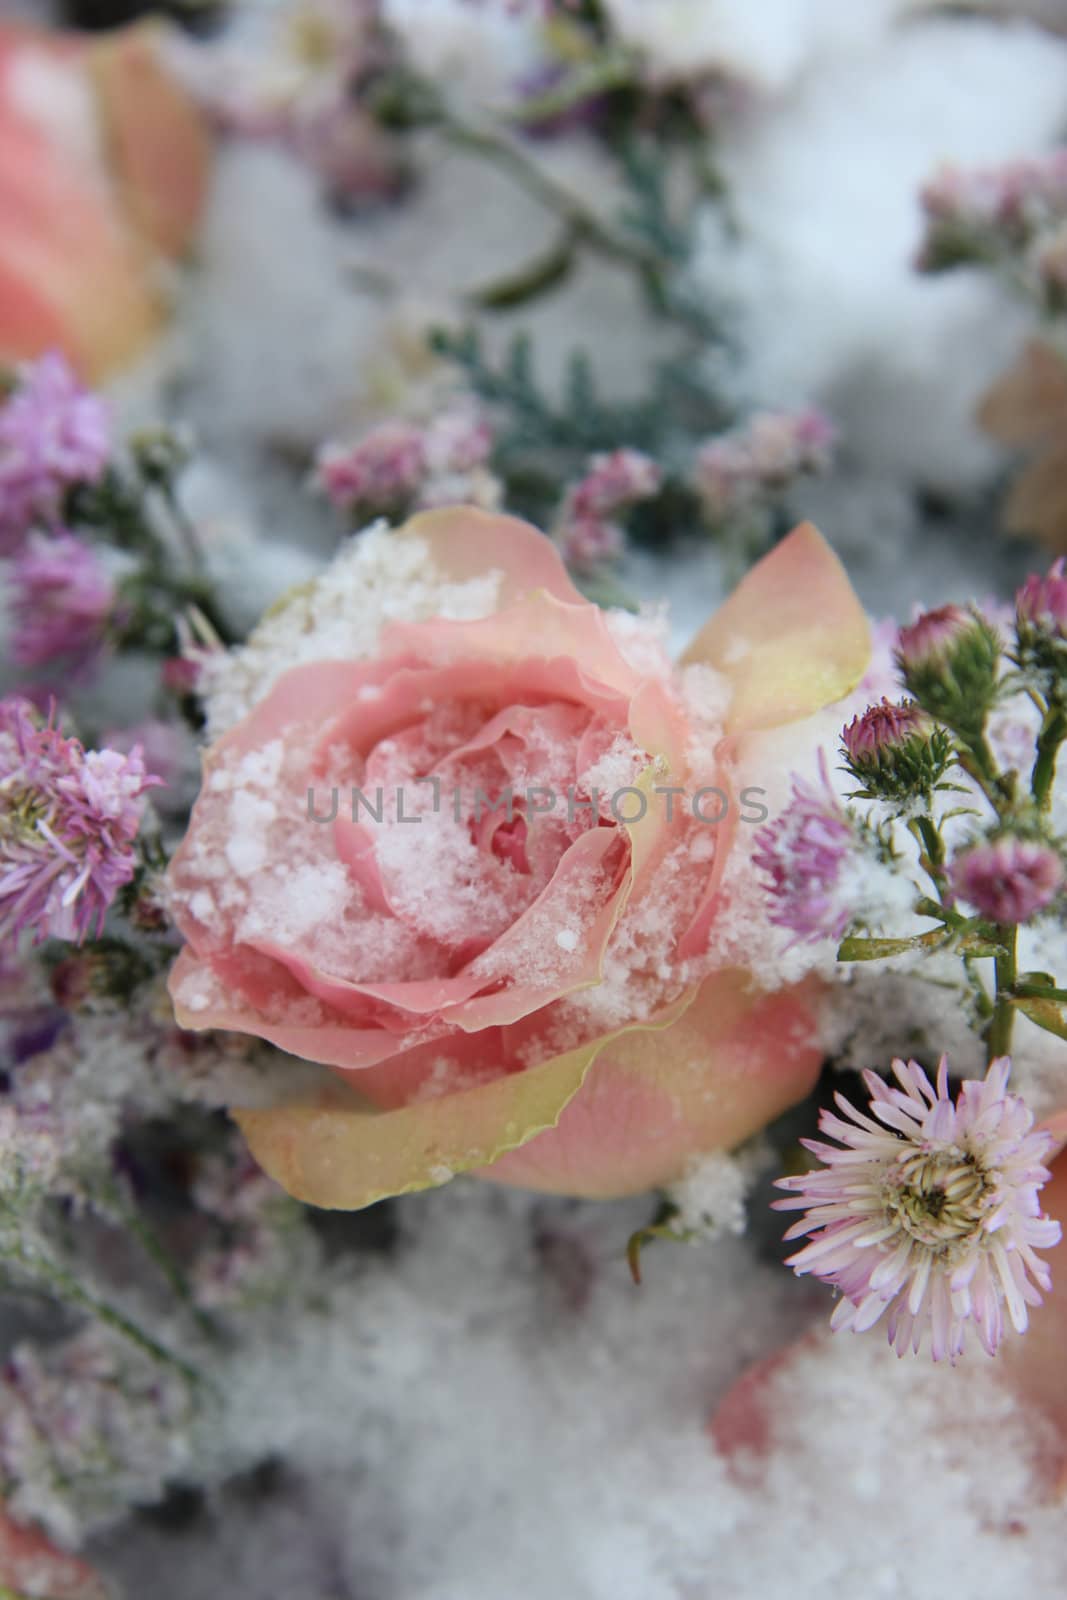 big pink rose on snow by studioportosabbia